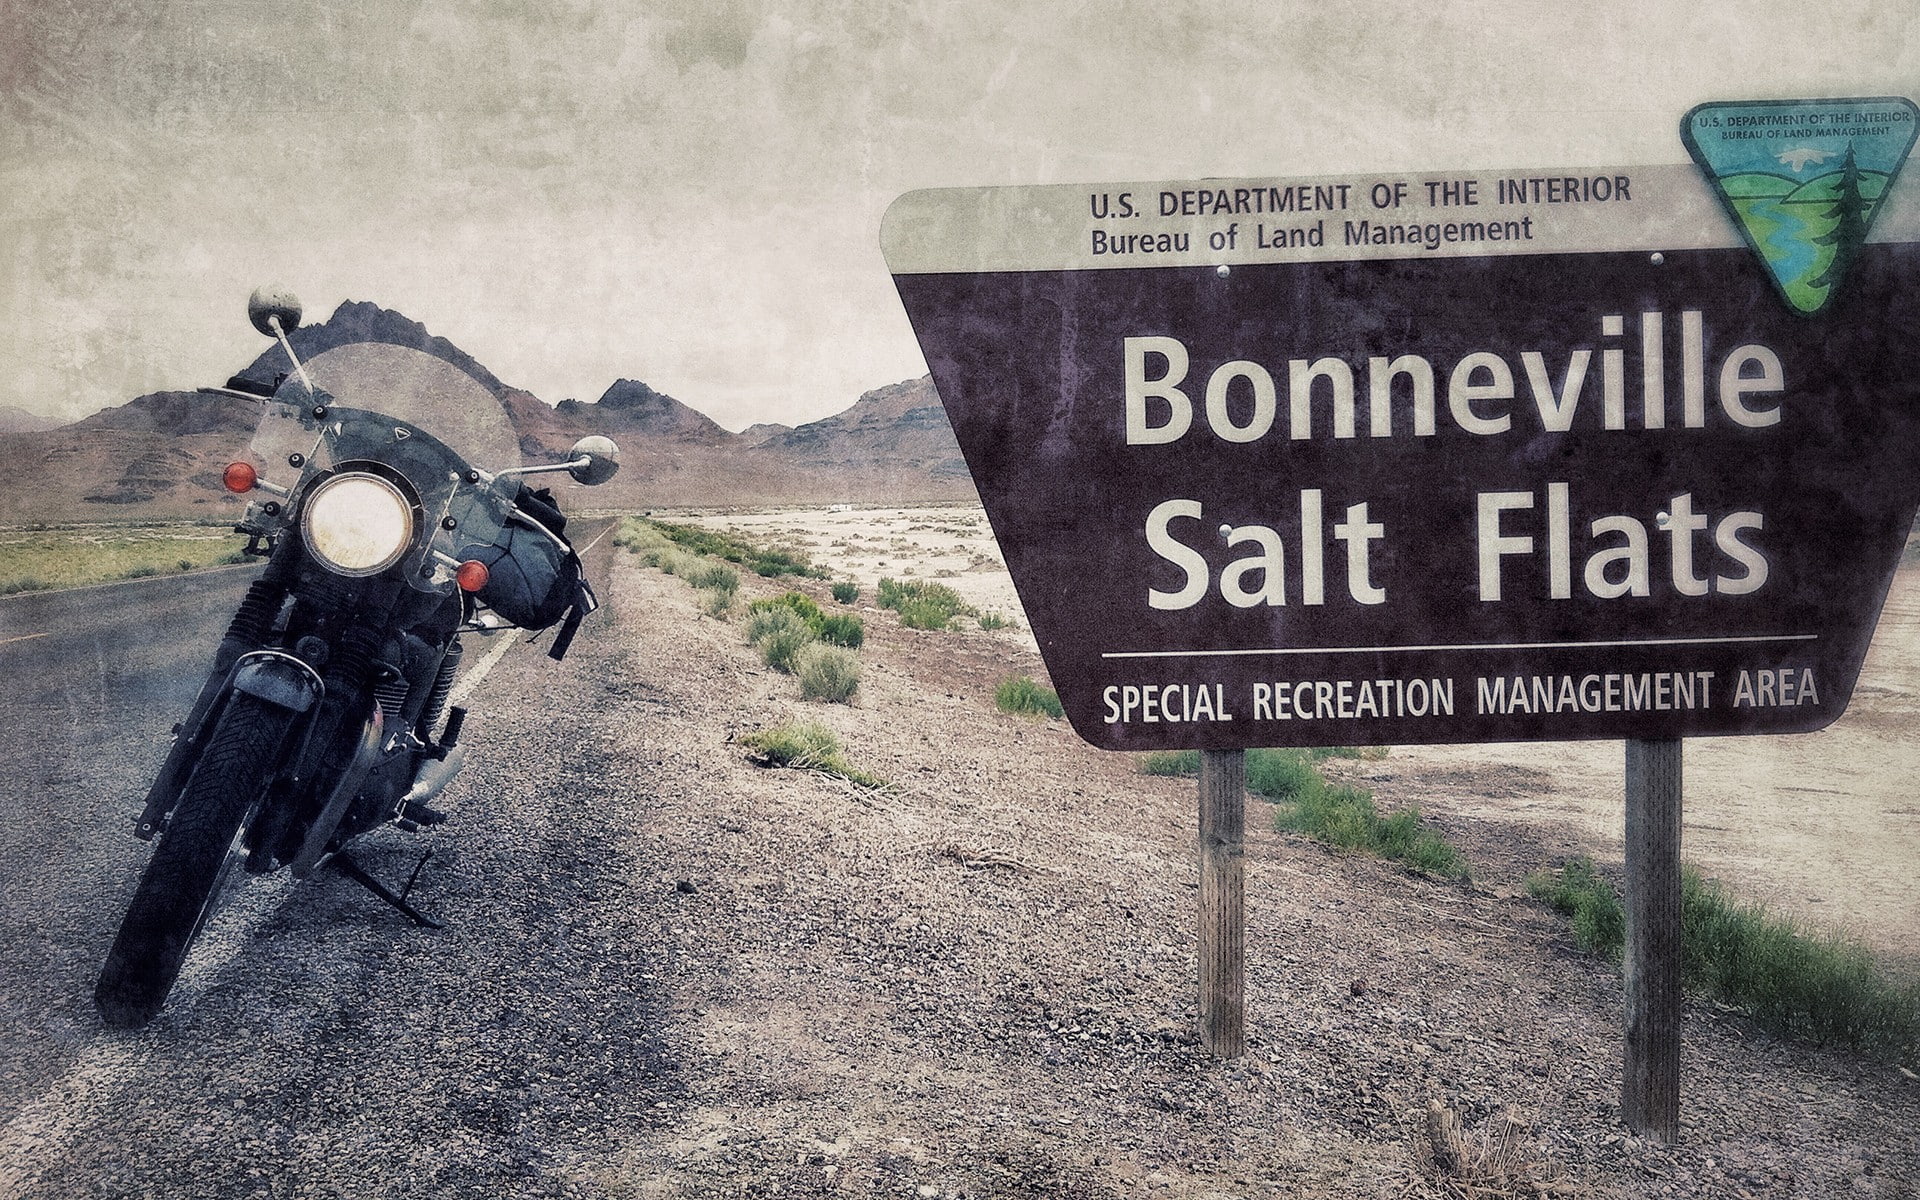 landscape, USA, Utah, signs, road, motorcycle